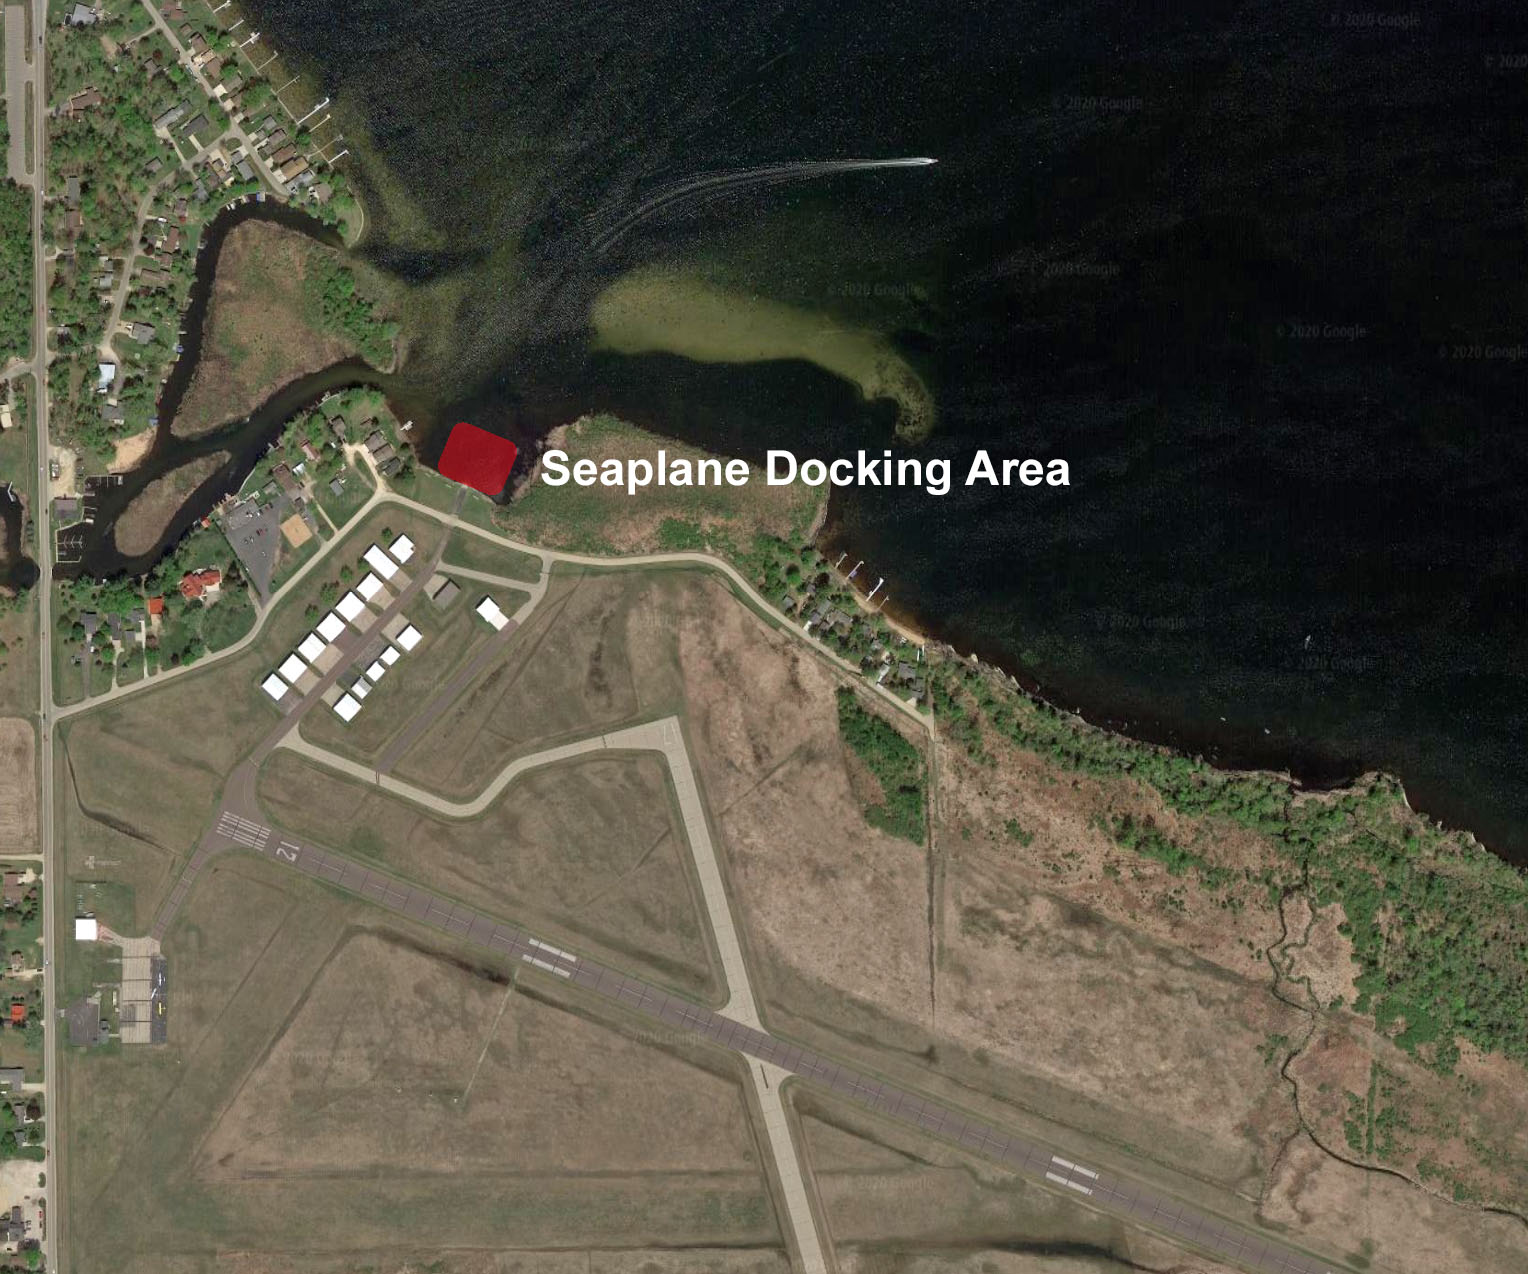 Seaplane Docking Area